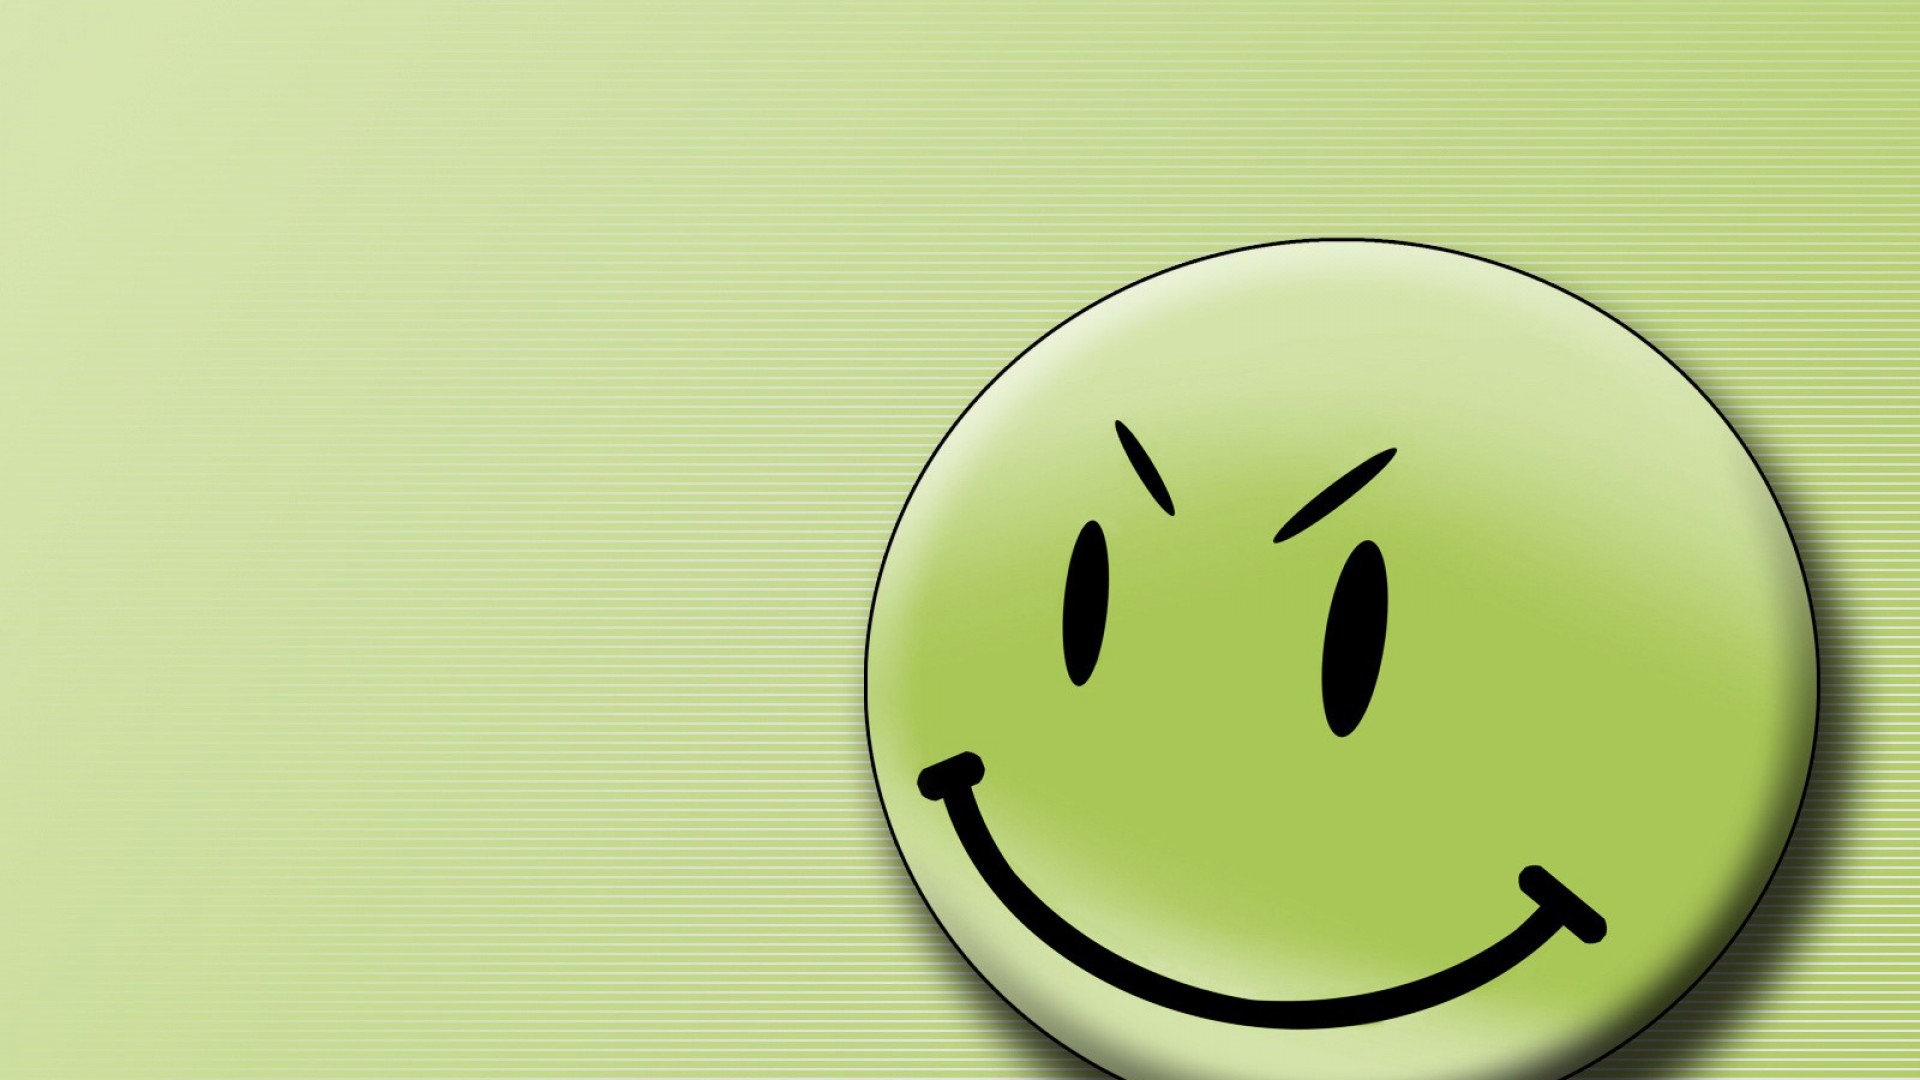 Green smiley face | DamnWallpapersDamnWallpapers